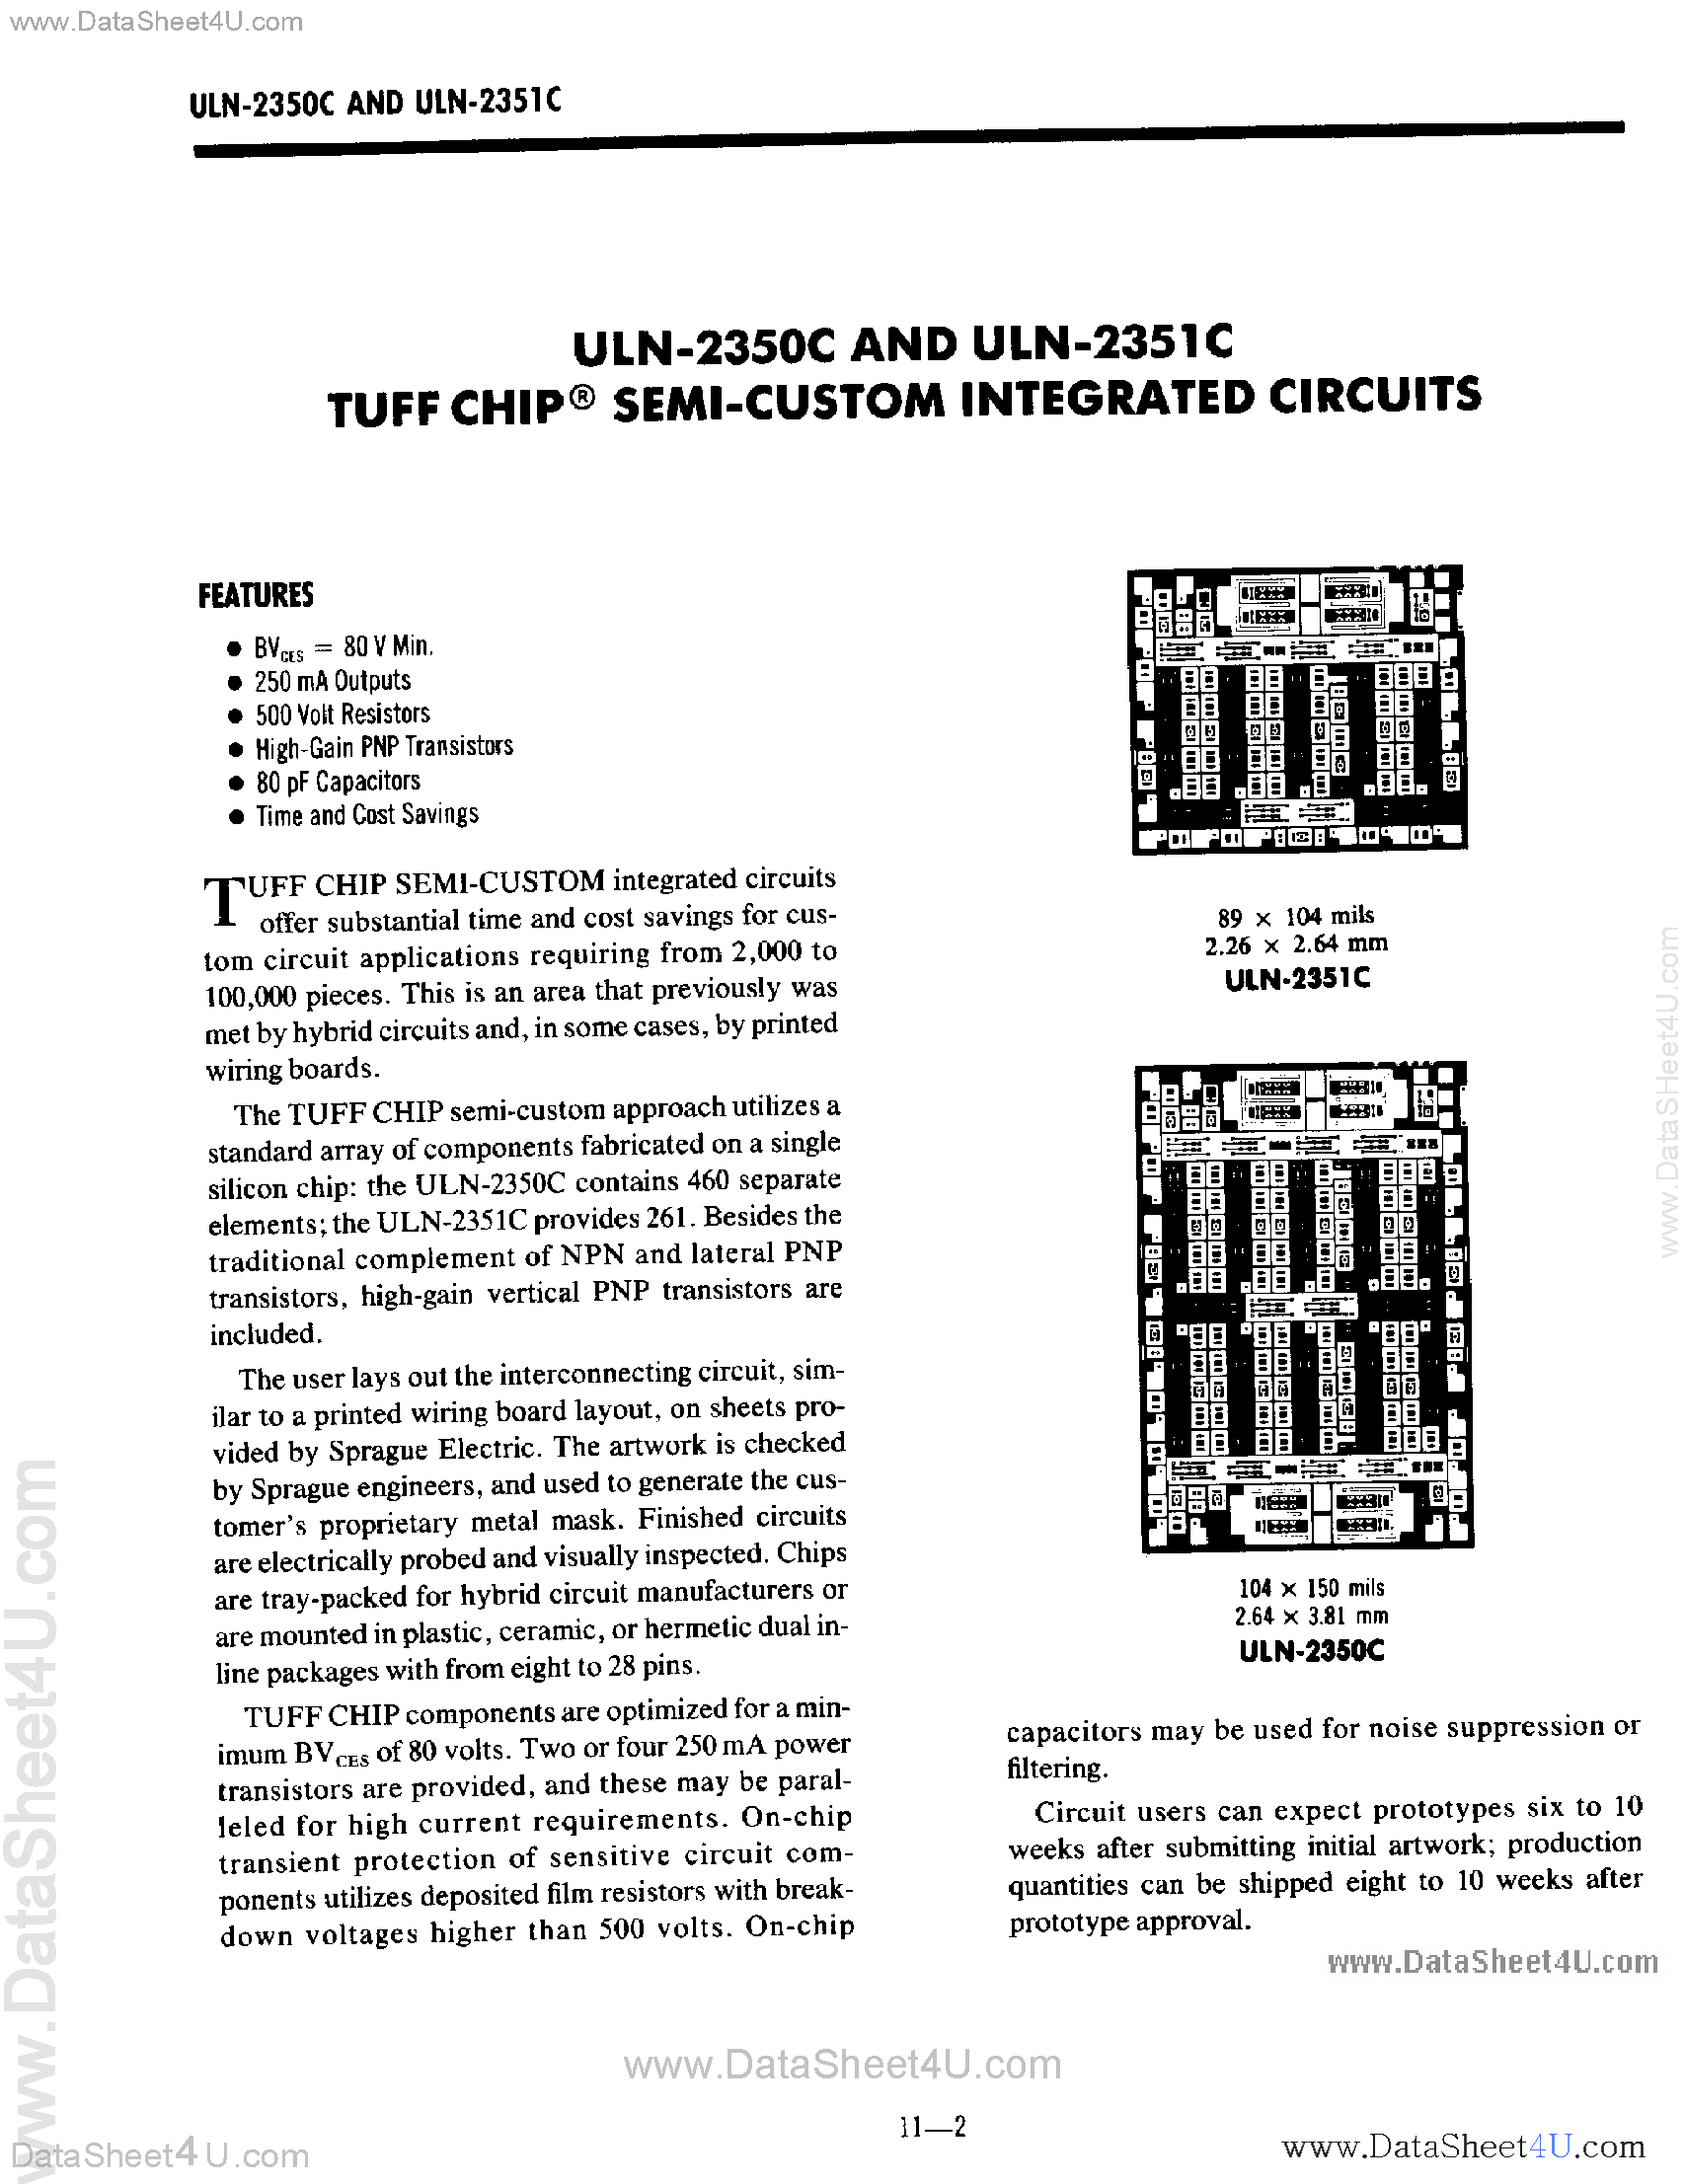 Datasheet ULN-2350C - (ULN-2350C / ULN-2351C) Tuff Chip Semi Custom Integrated Circuits page 1